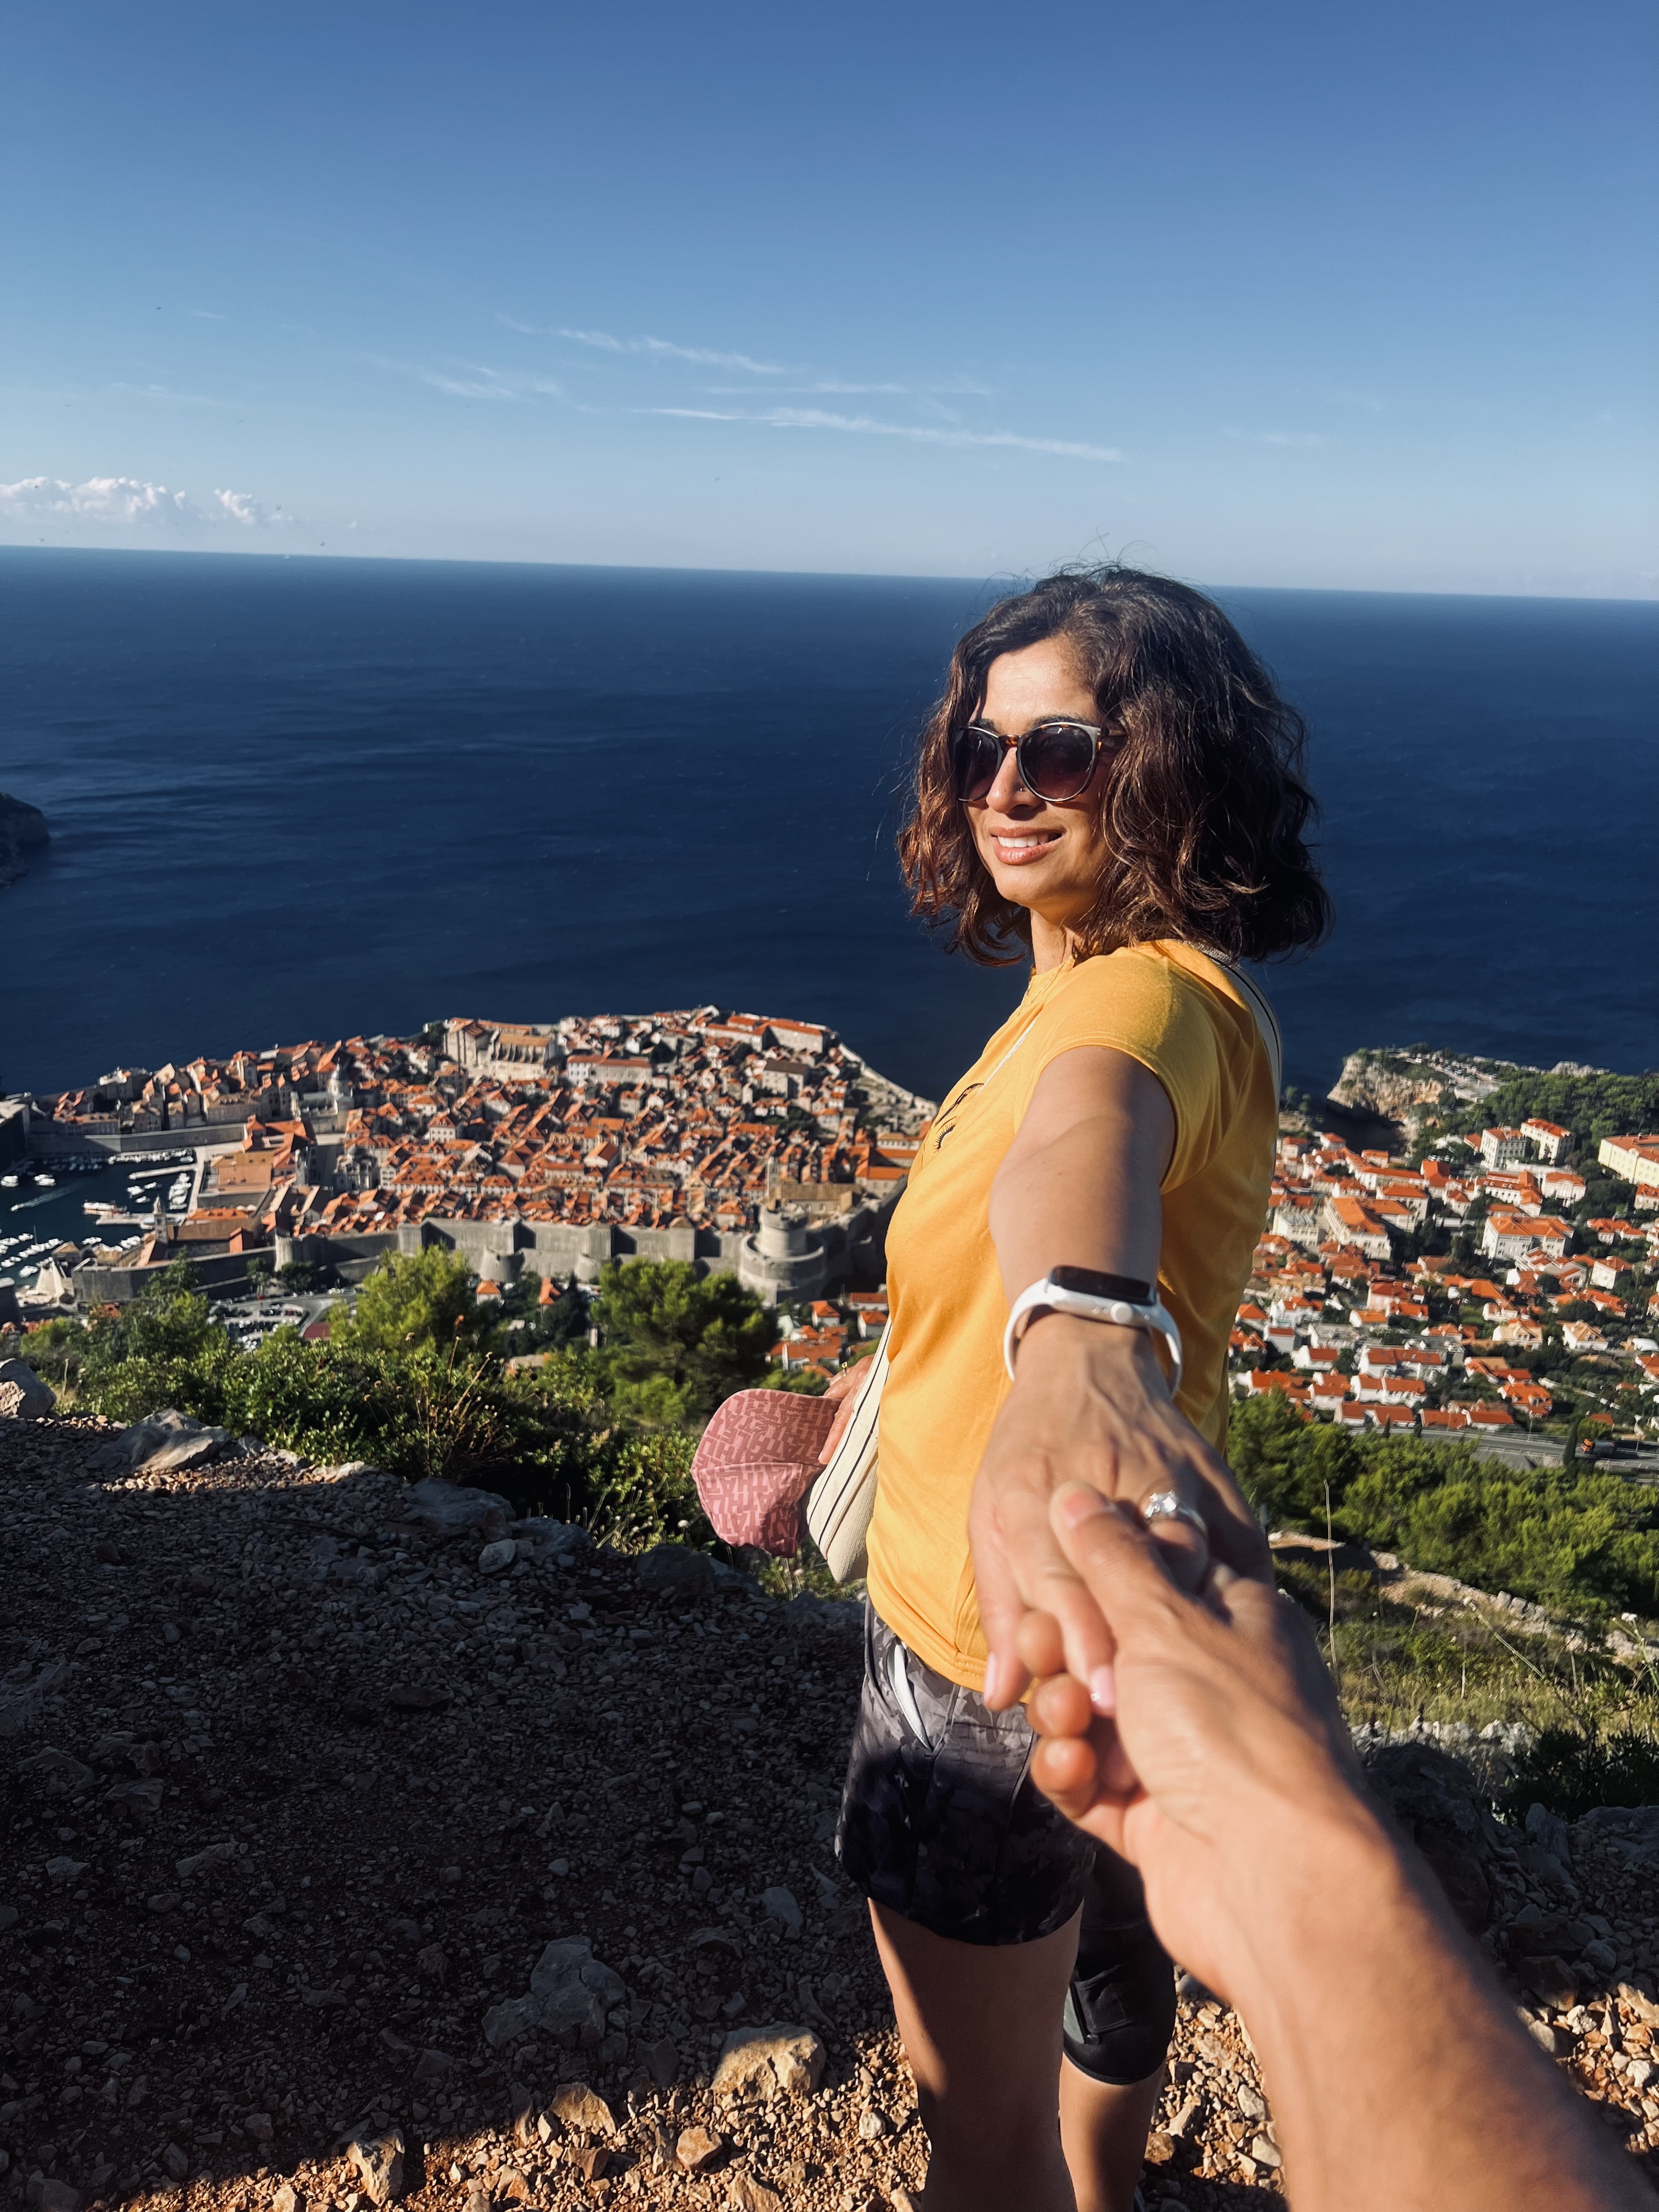 Hiking Mount Srđ: Celebrating Friendships in Croatia